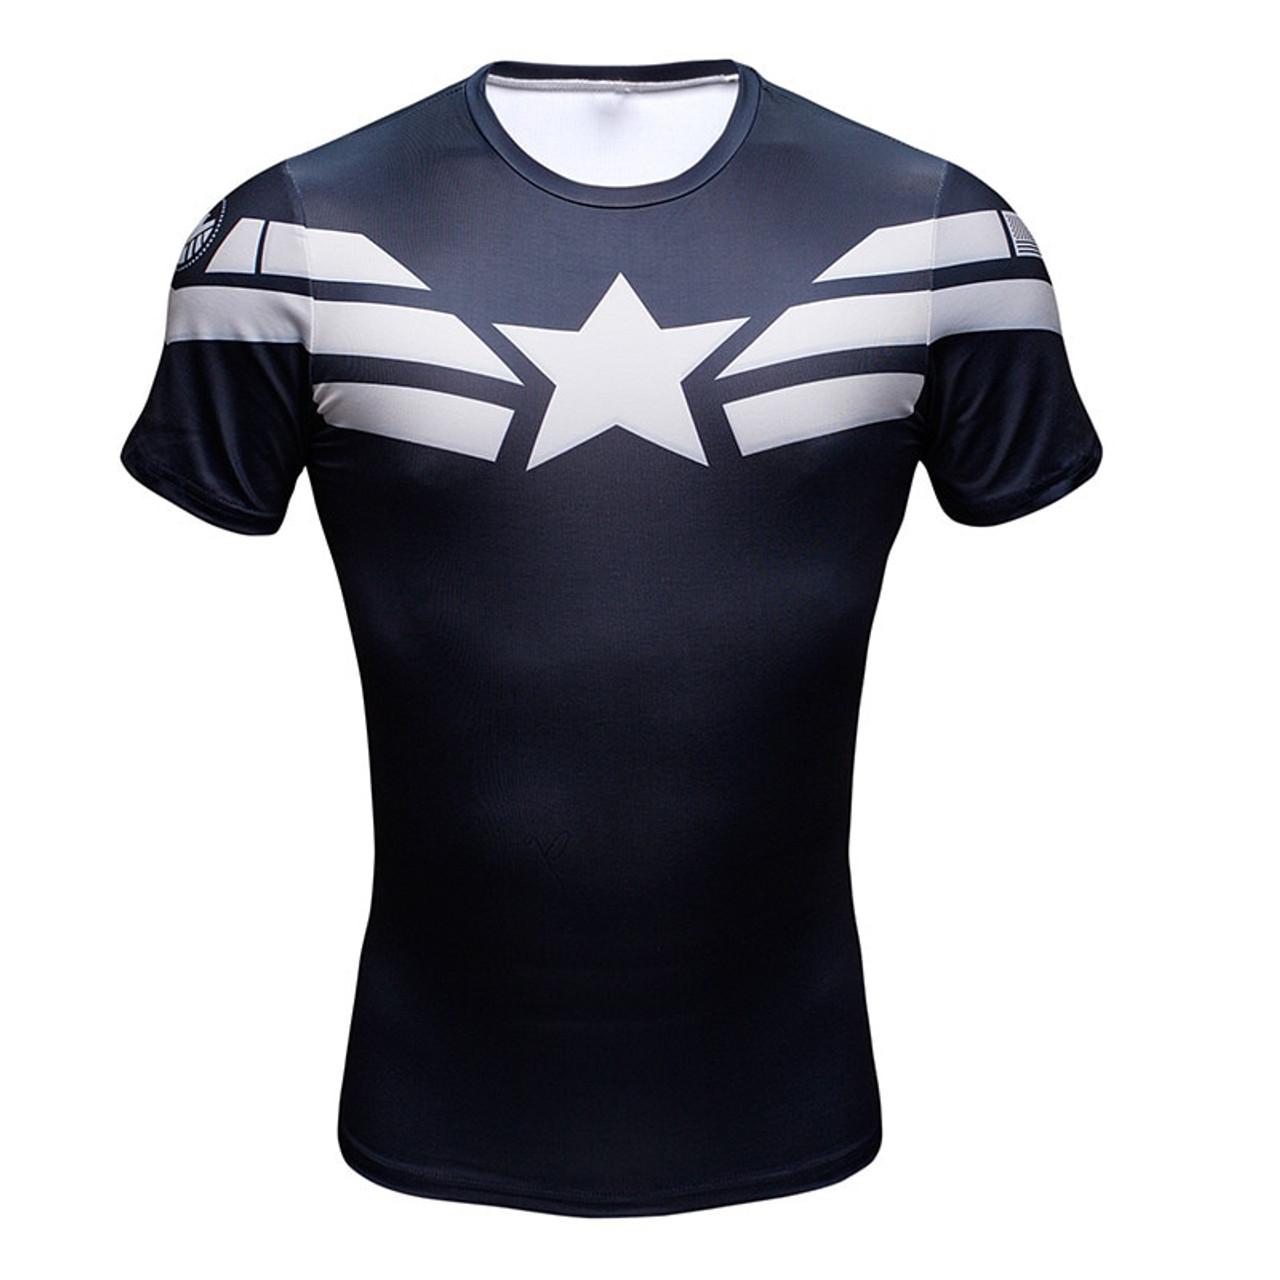 Spiderman Captain America Men's Superhero Compression Shirt Athletic Fitness Gym Top Workout T Shirts for Men 